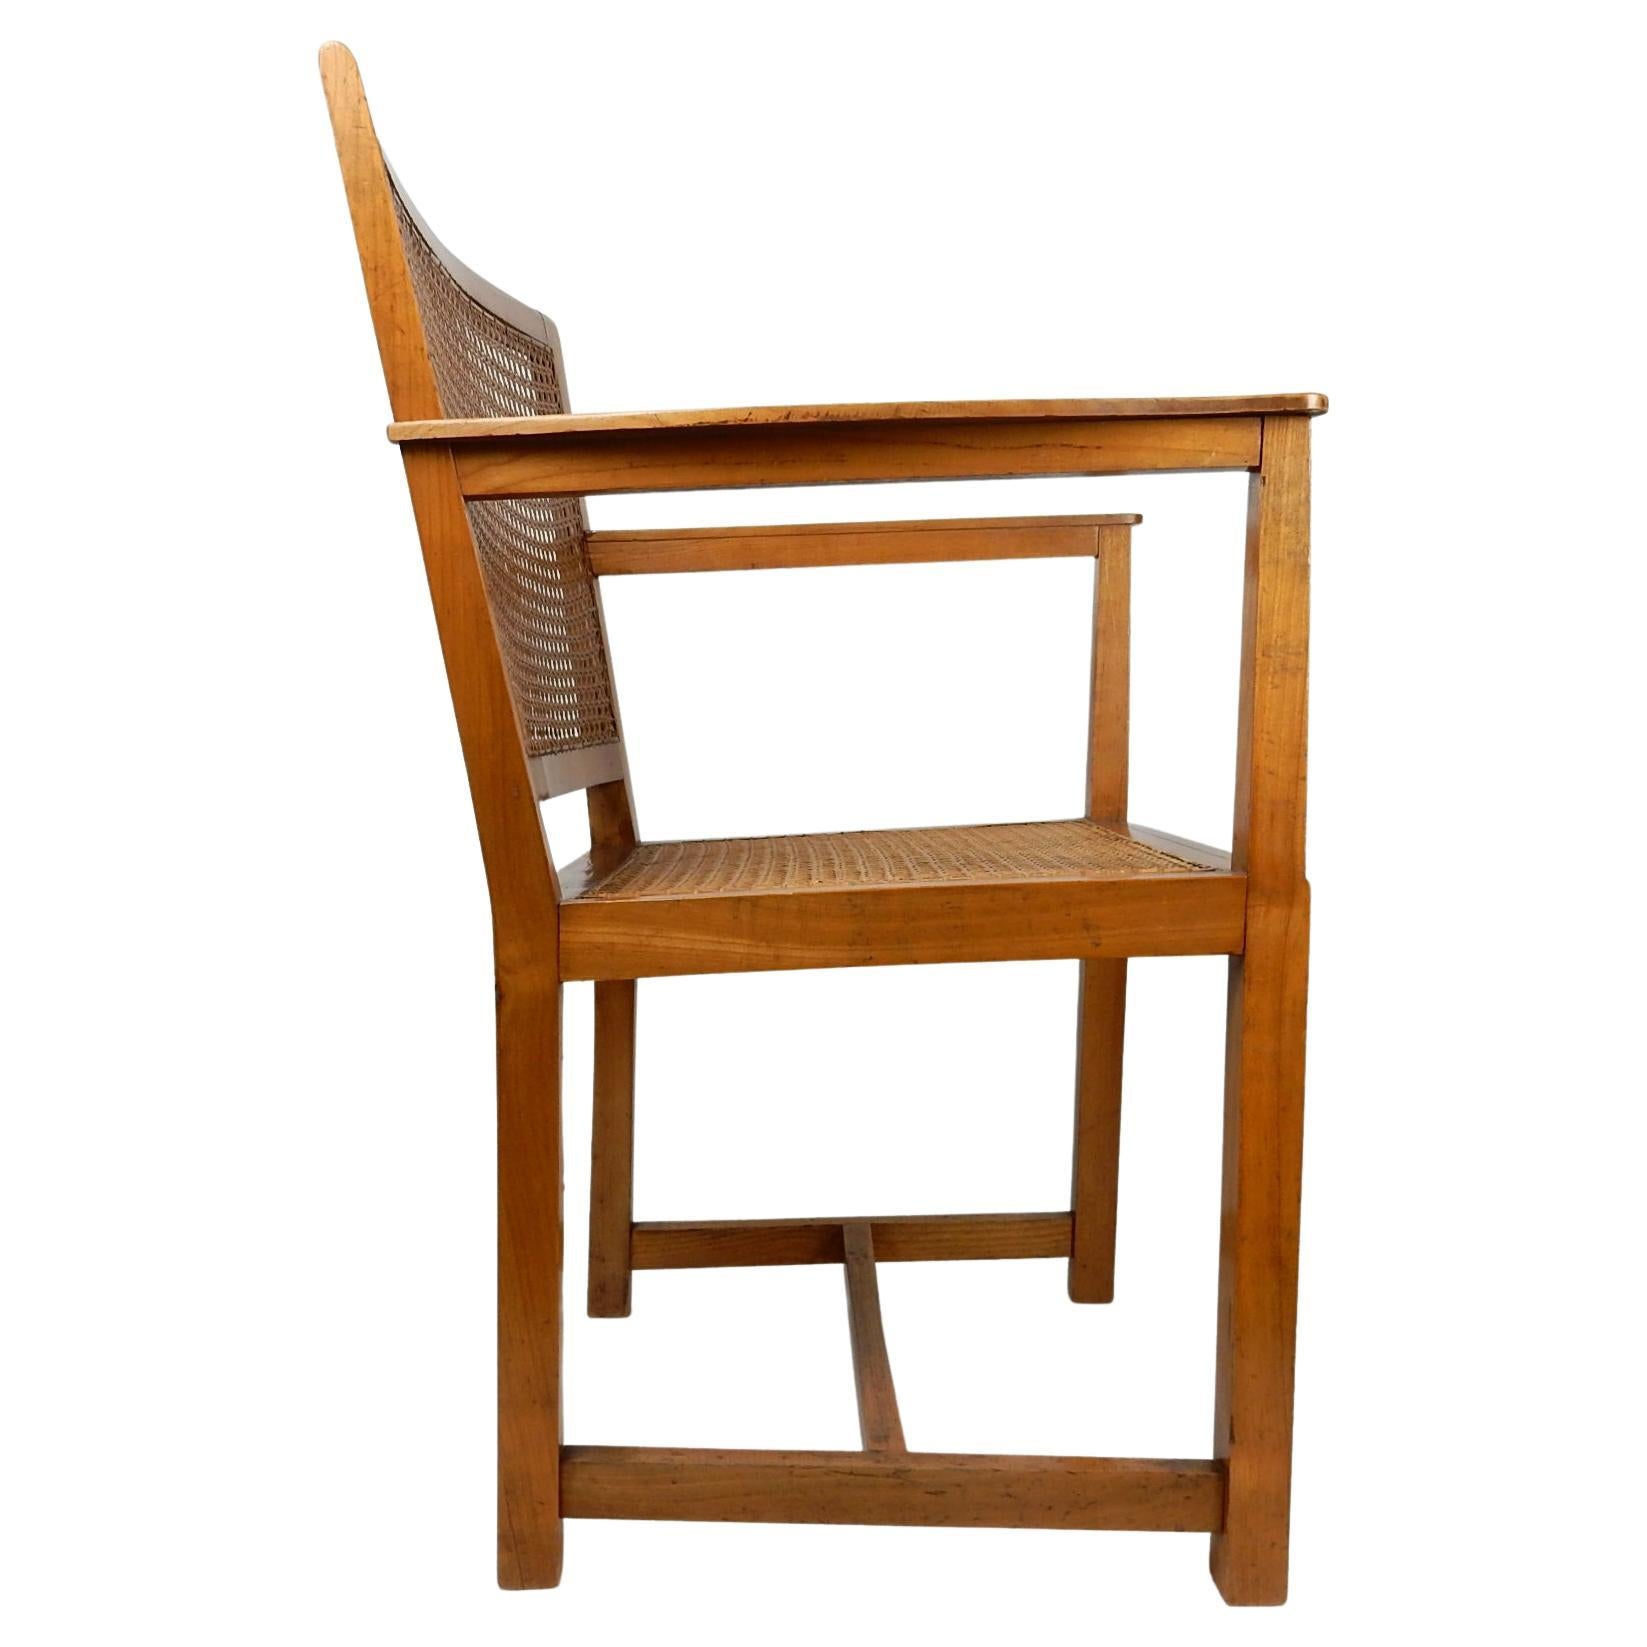 Architect Oskar Strnad 1879-1935 Pine & Cane Arm Chair 1920's Art Deco For Sale 2